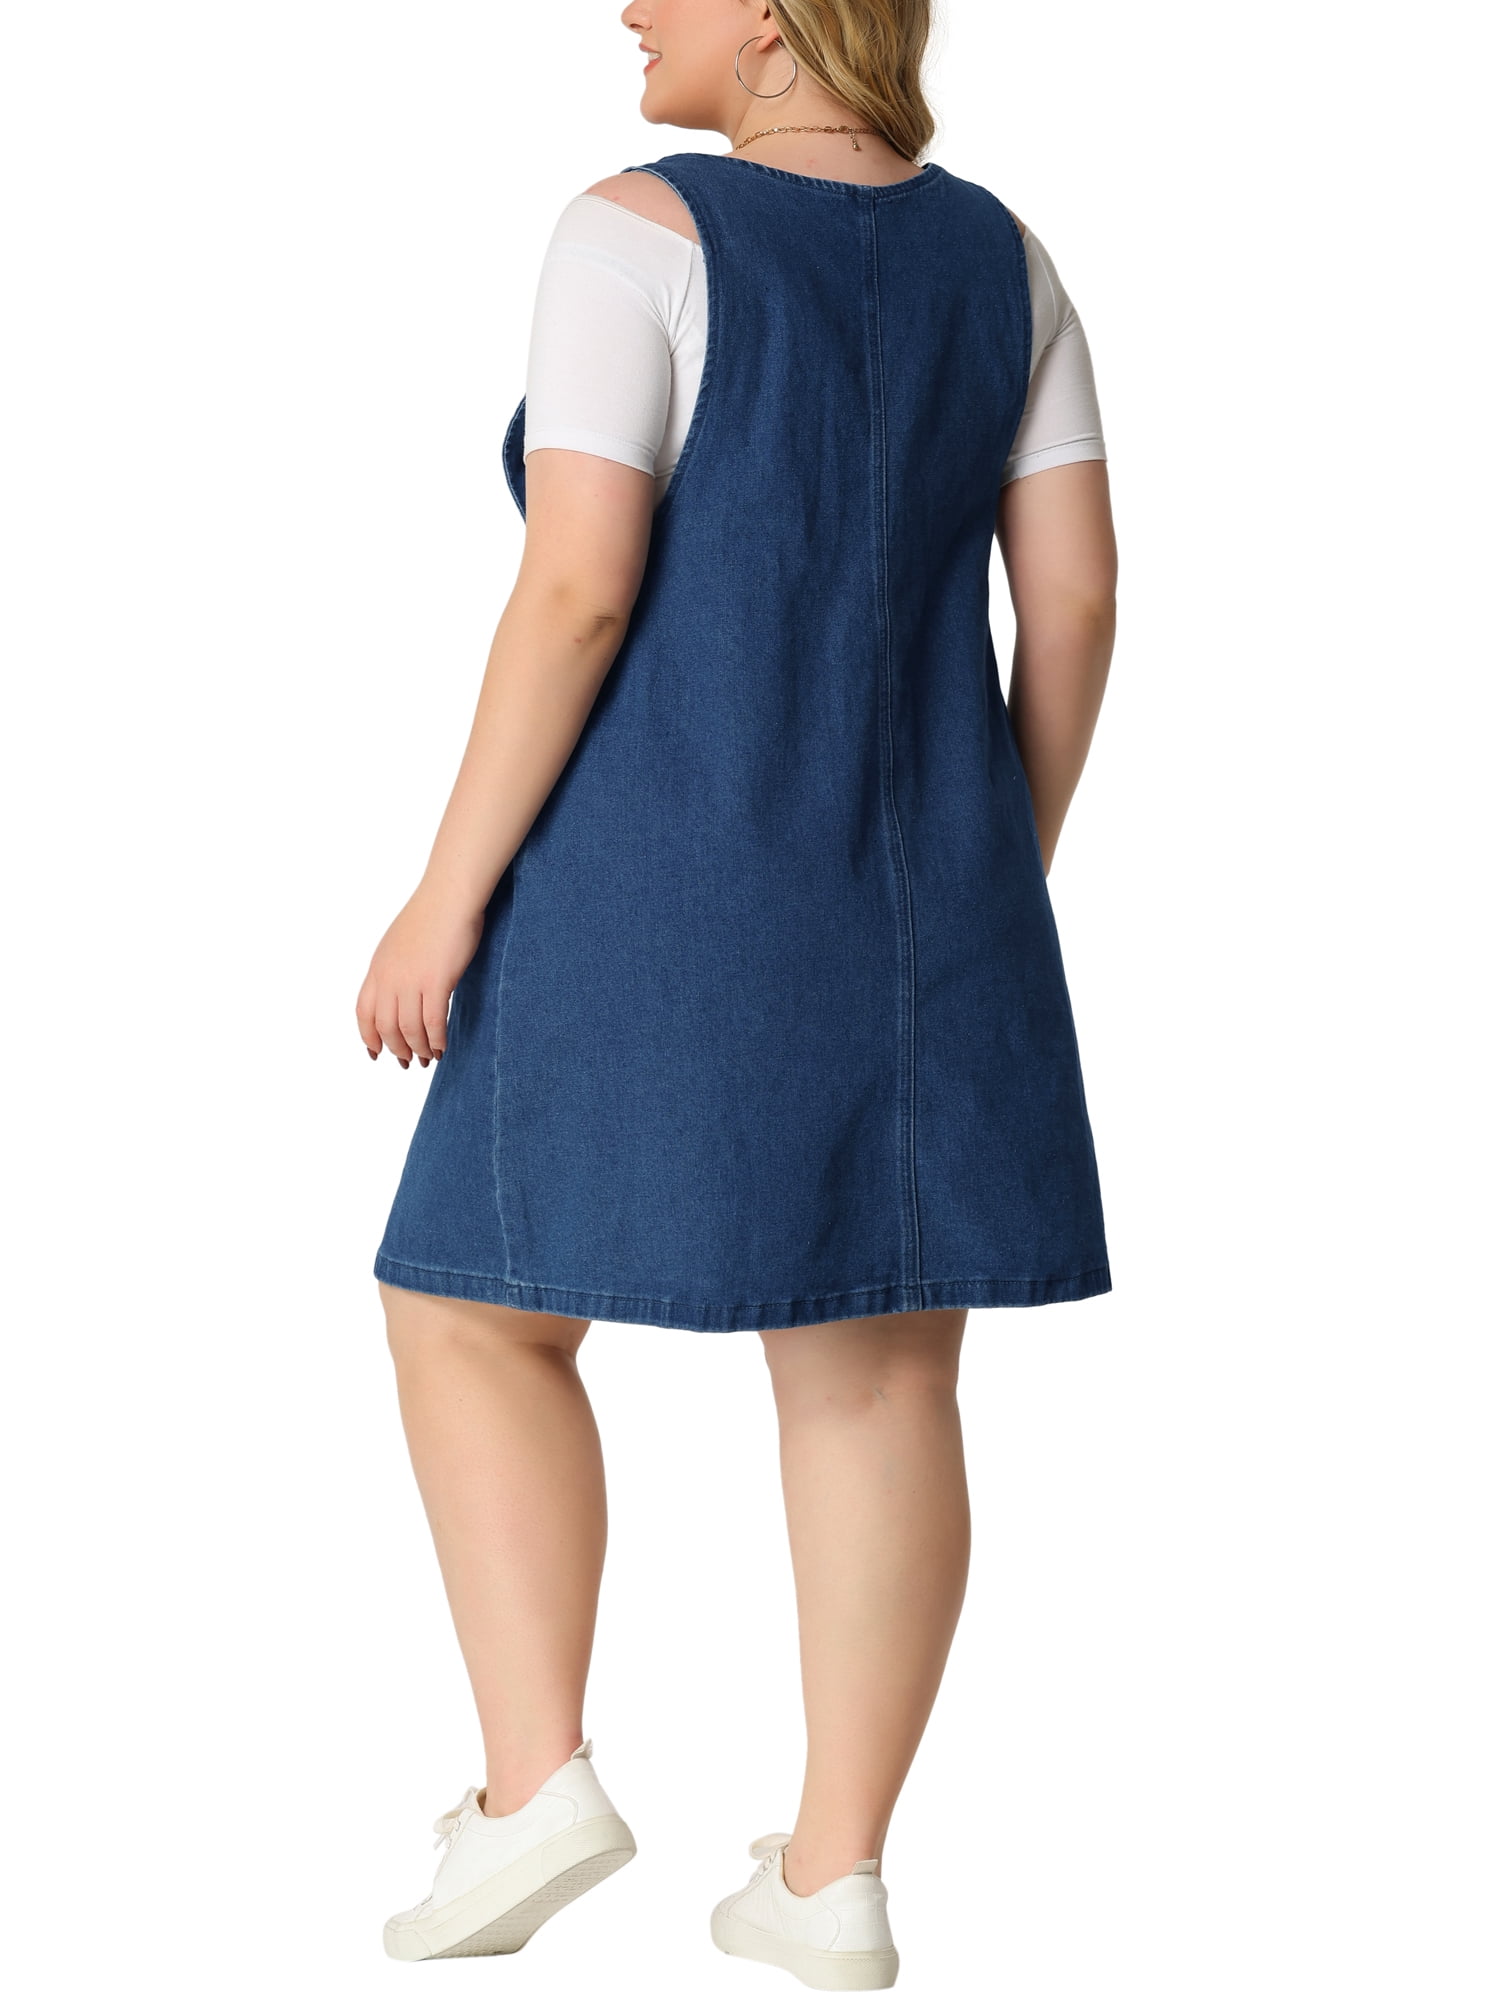 Agnes Orinda Plus Size Denim Dresses for Women Adjustable Straps Denim Bib Jumper with Pockets - Walmart.com